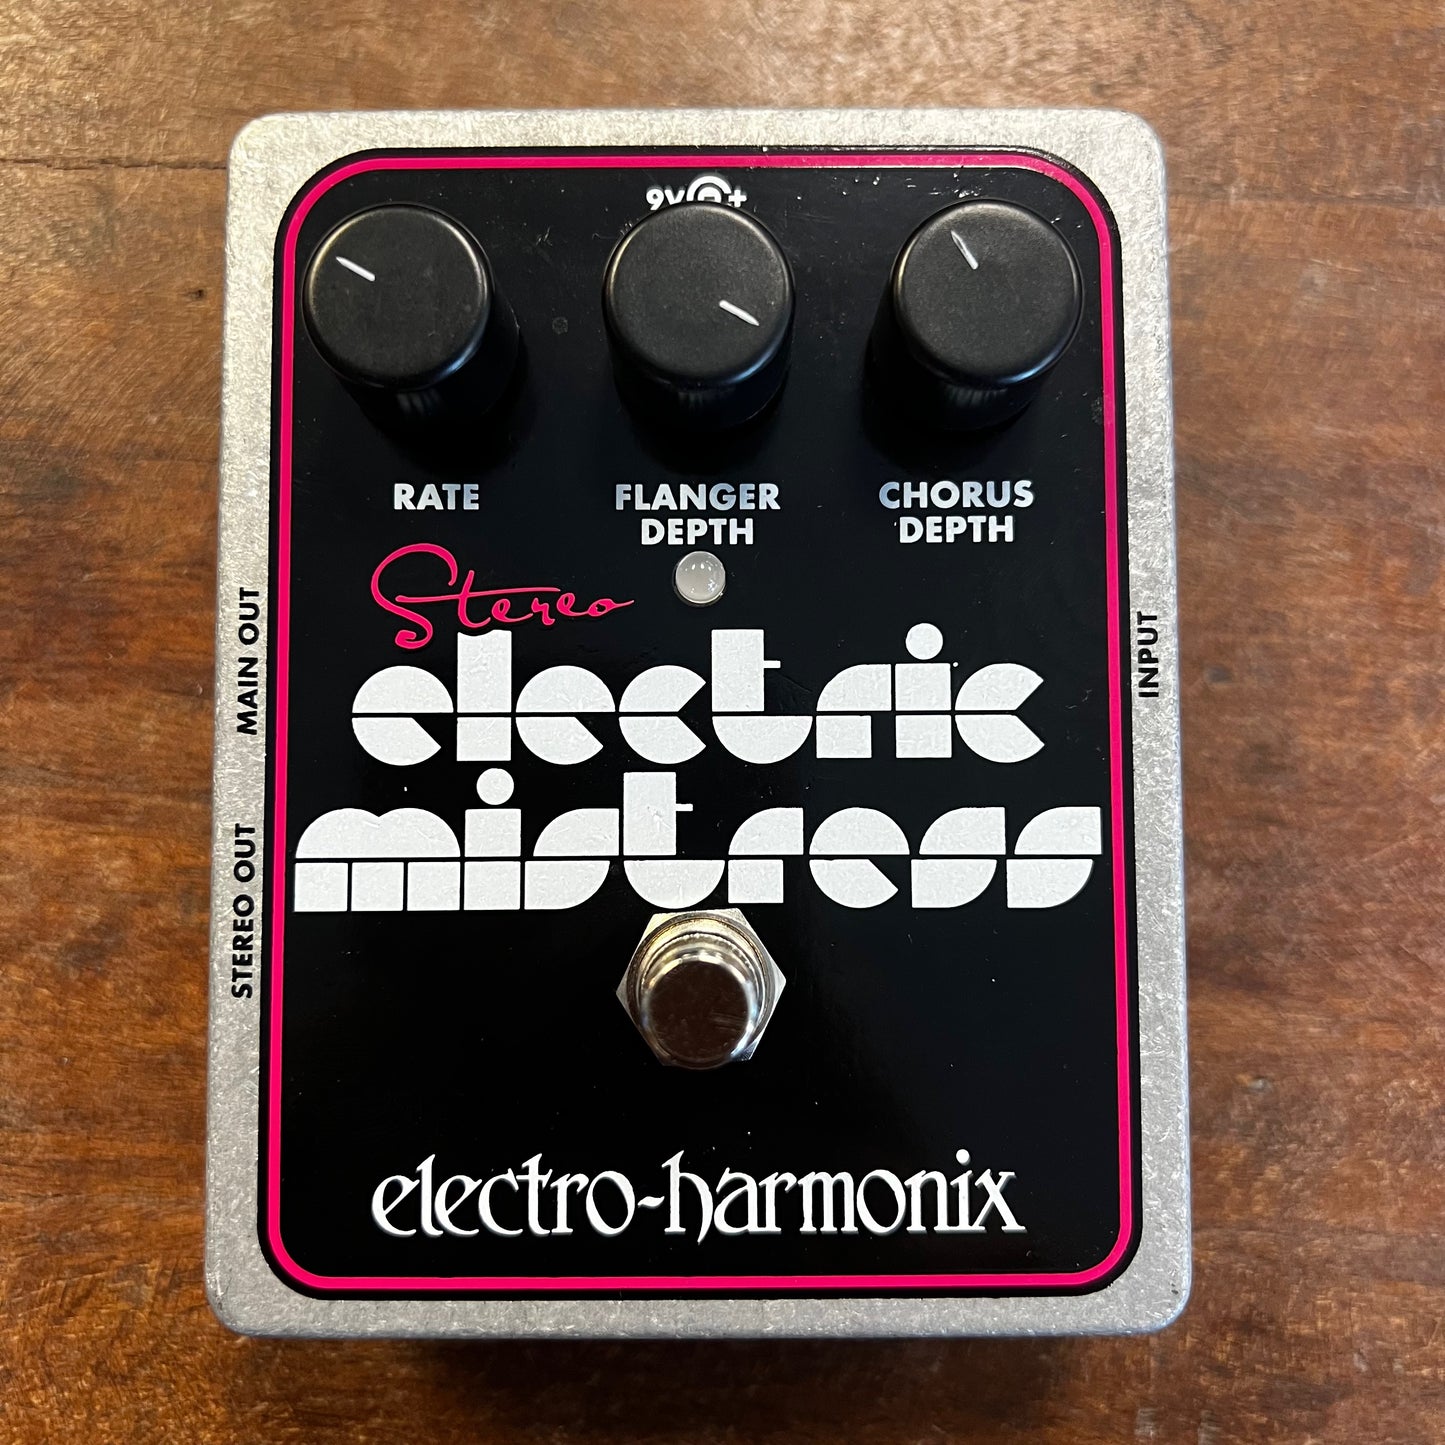 Electro-Harmonix Stereo Electric Mistress flanger